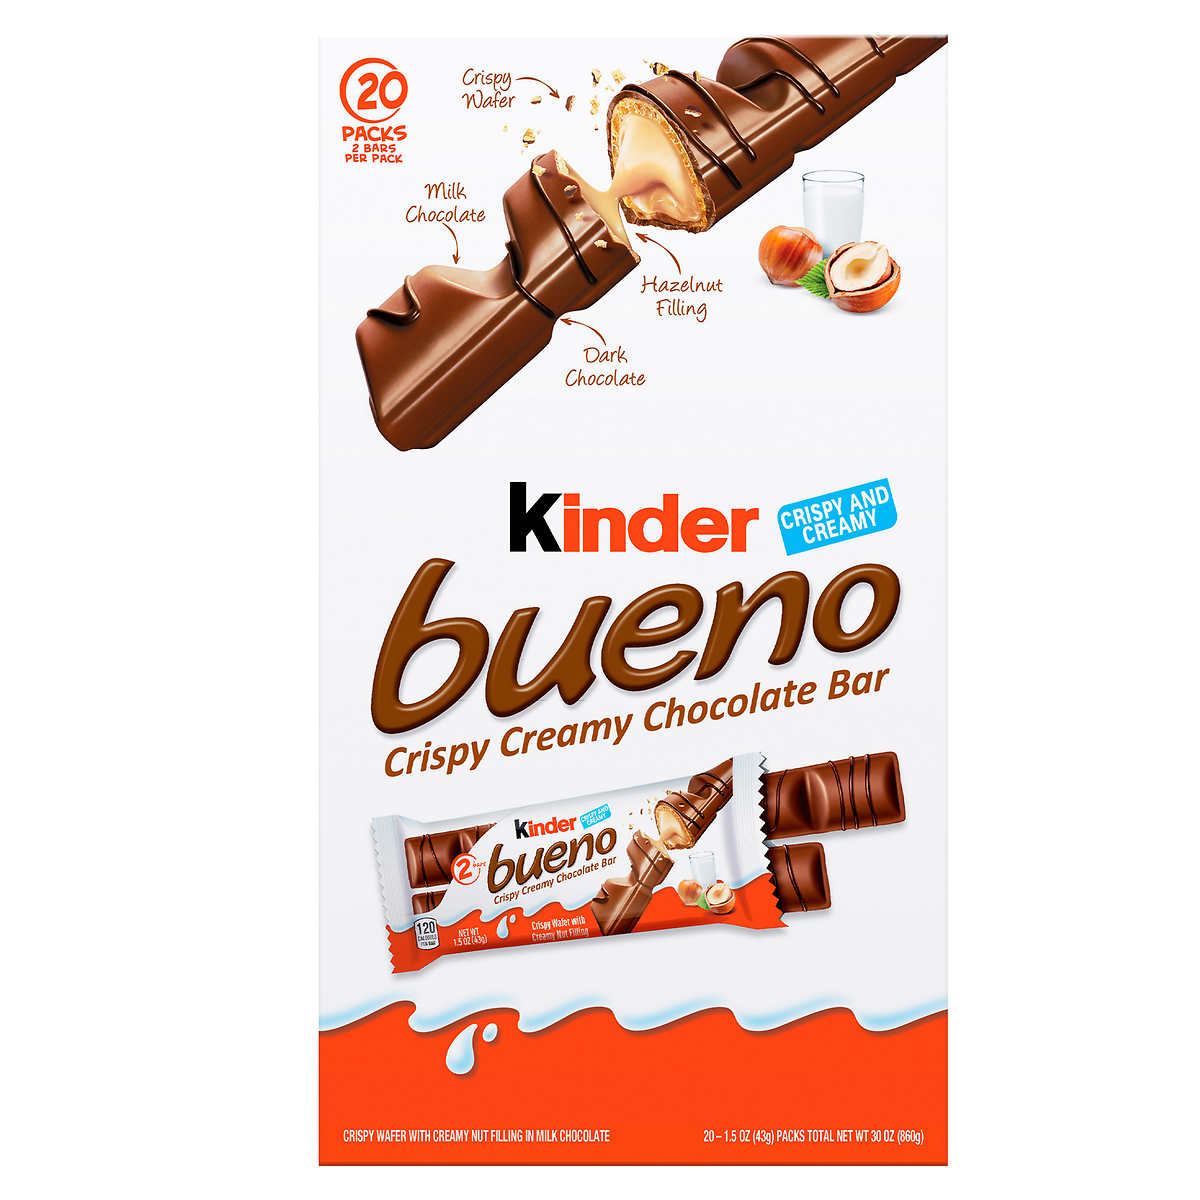 Kinder Chocolate Maxi - Kinder Mexico